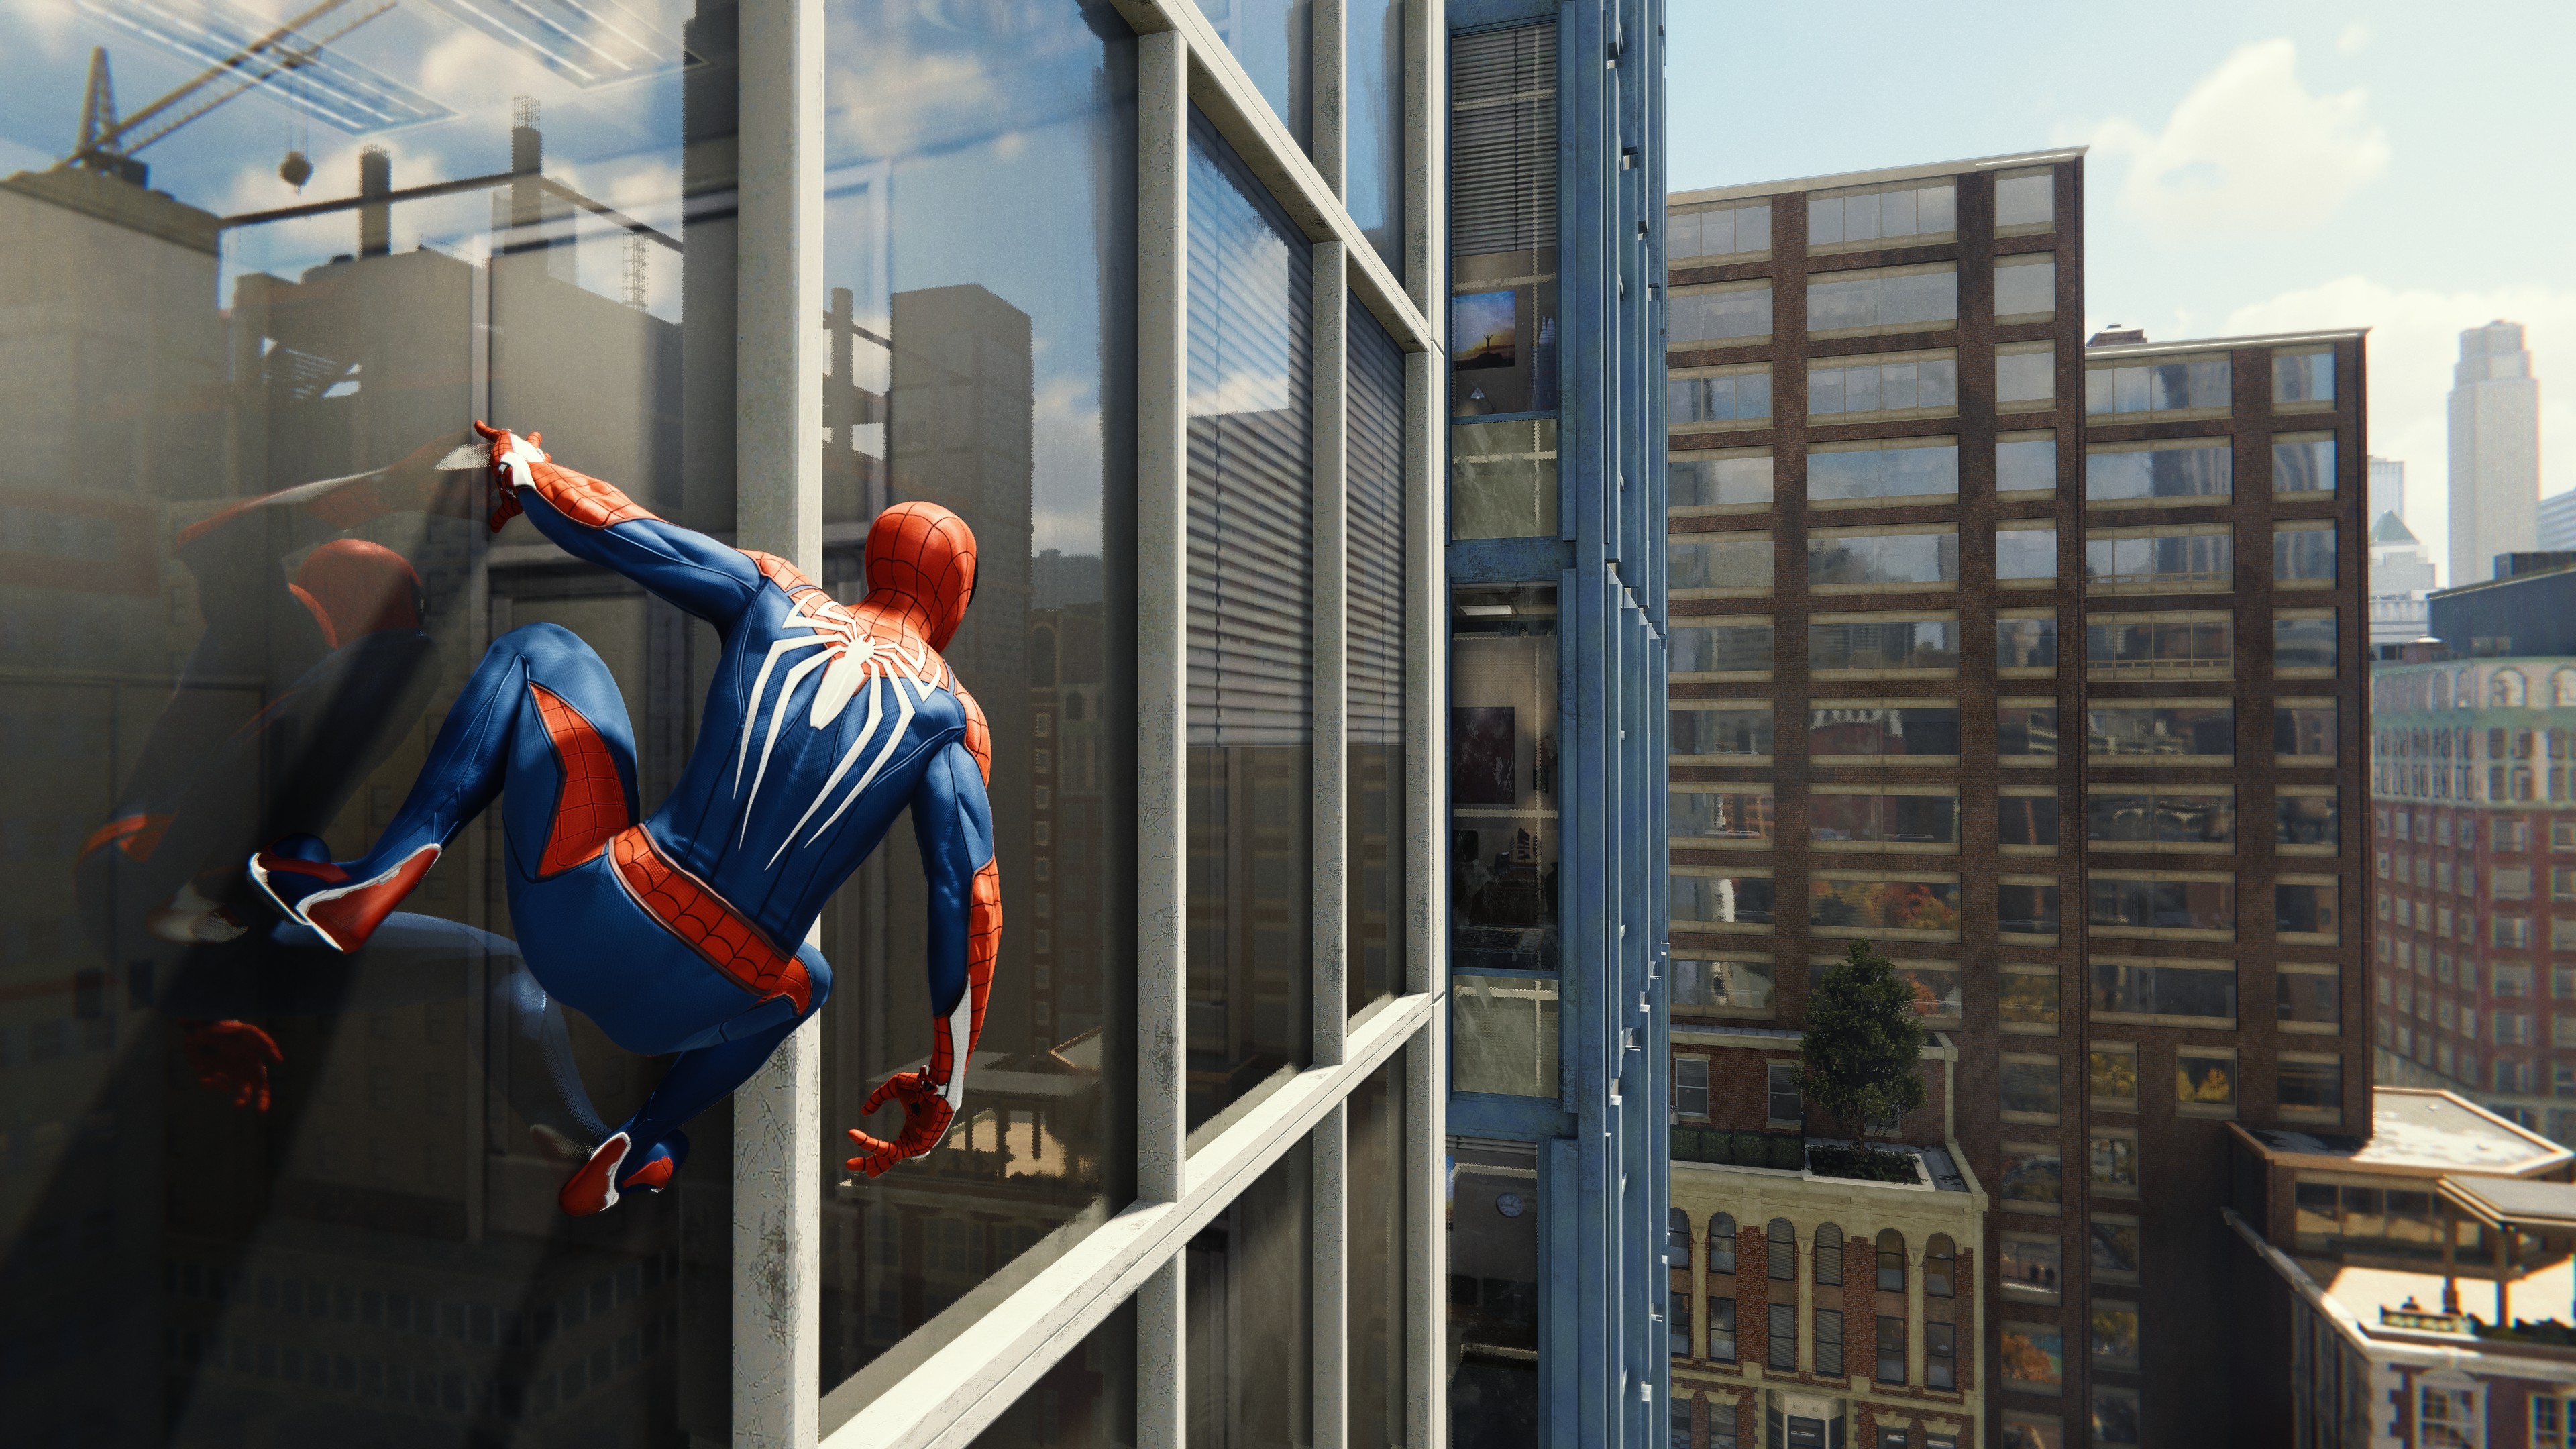 Marvel's Spider-Man PC: Benchmarks, best settings, DLAA